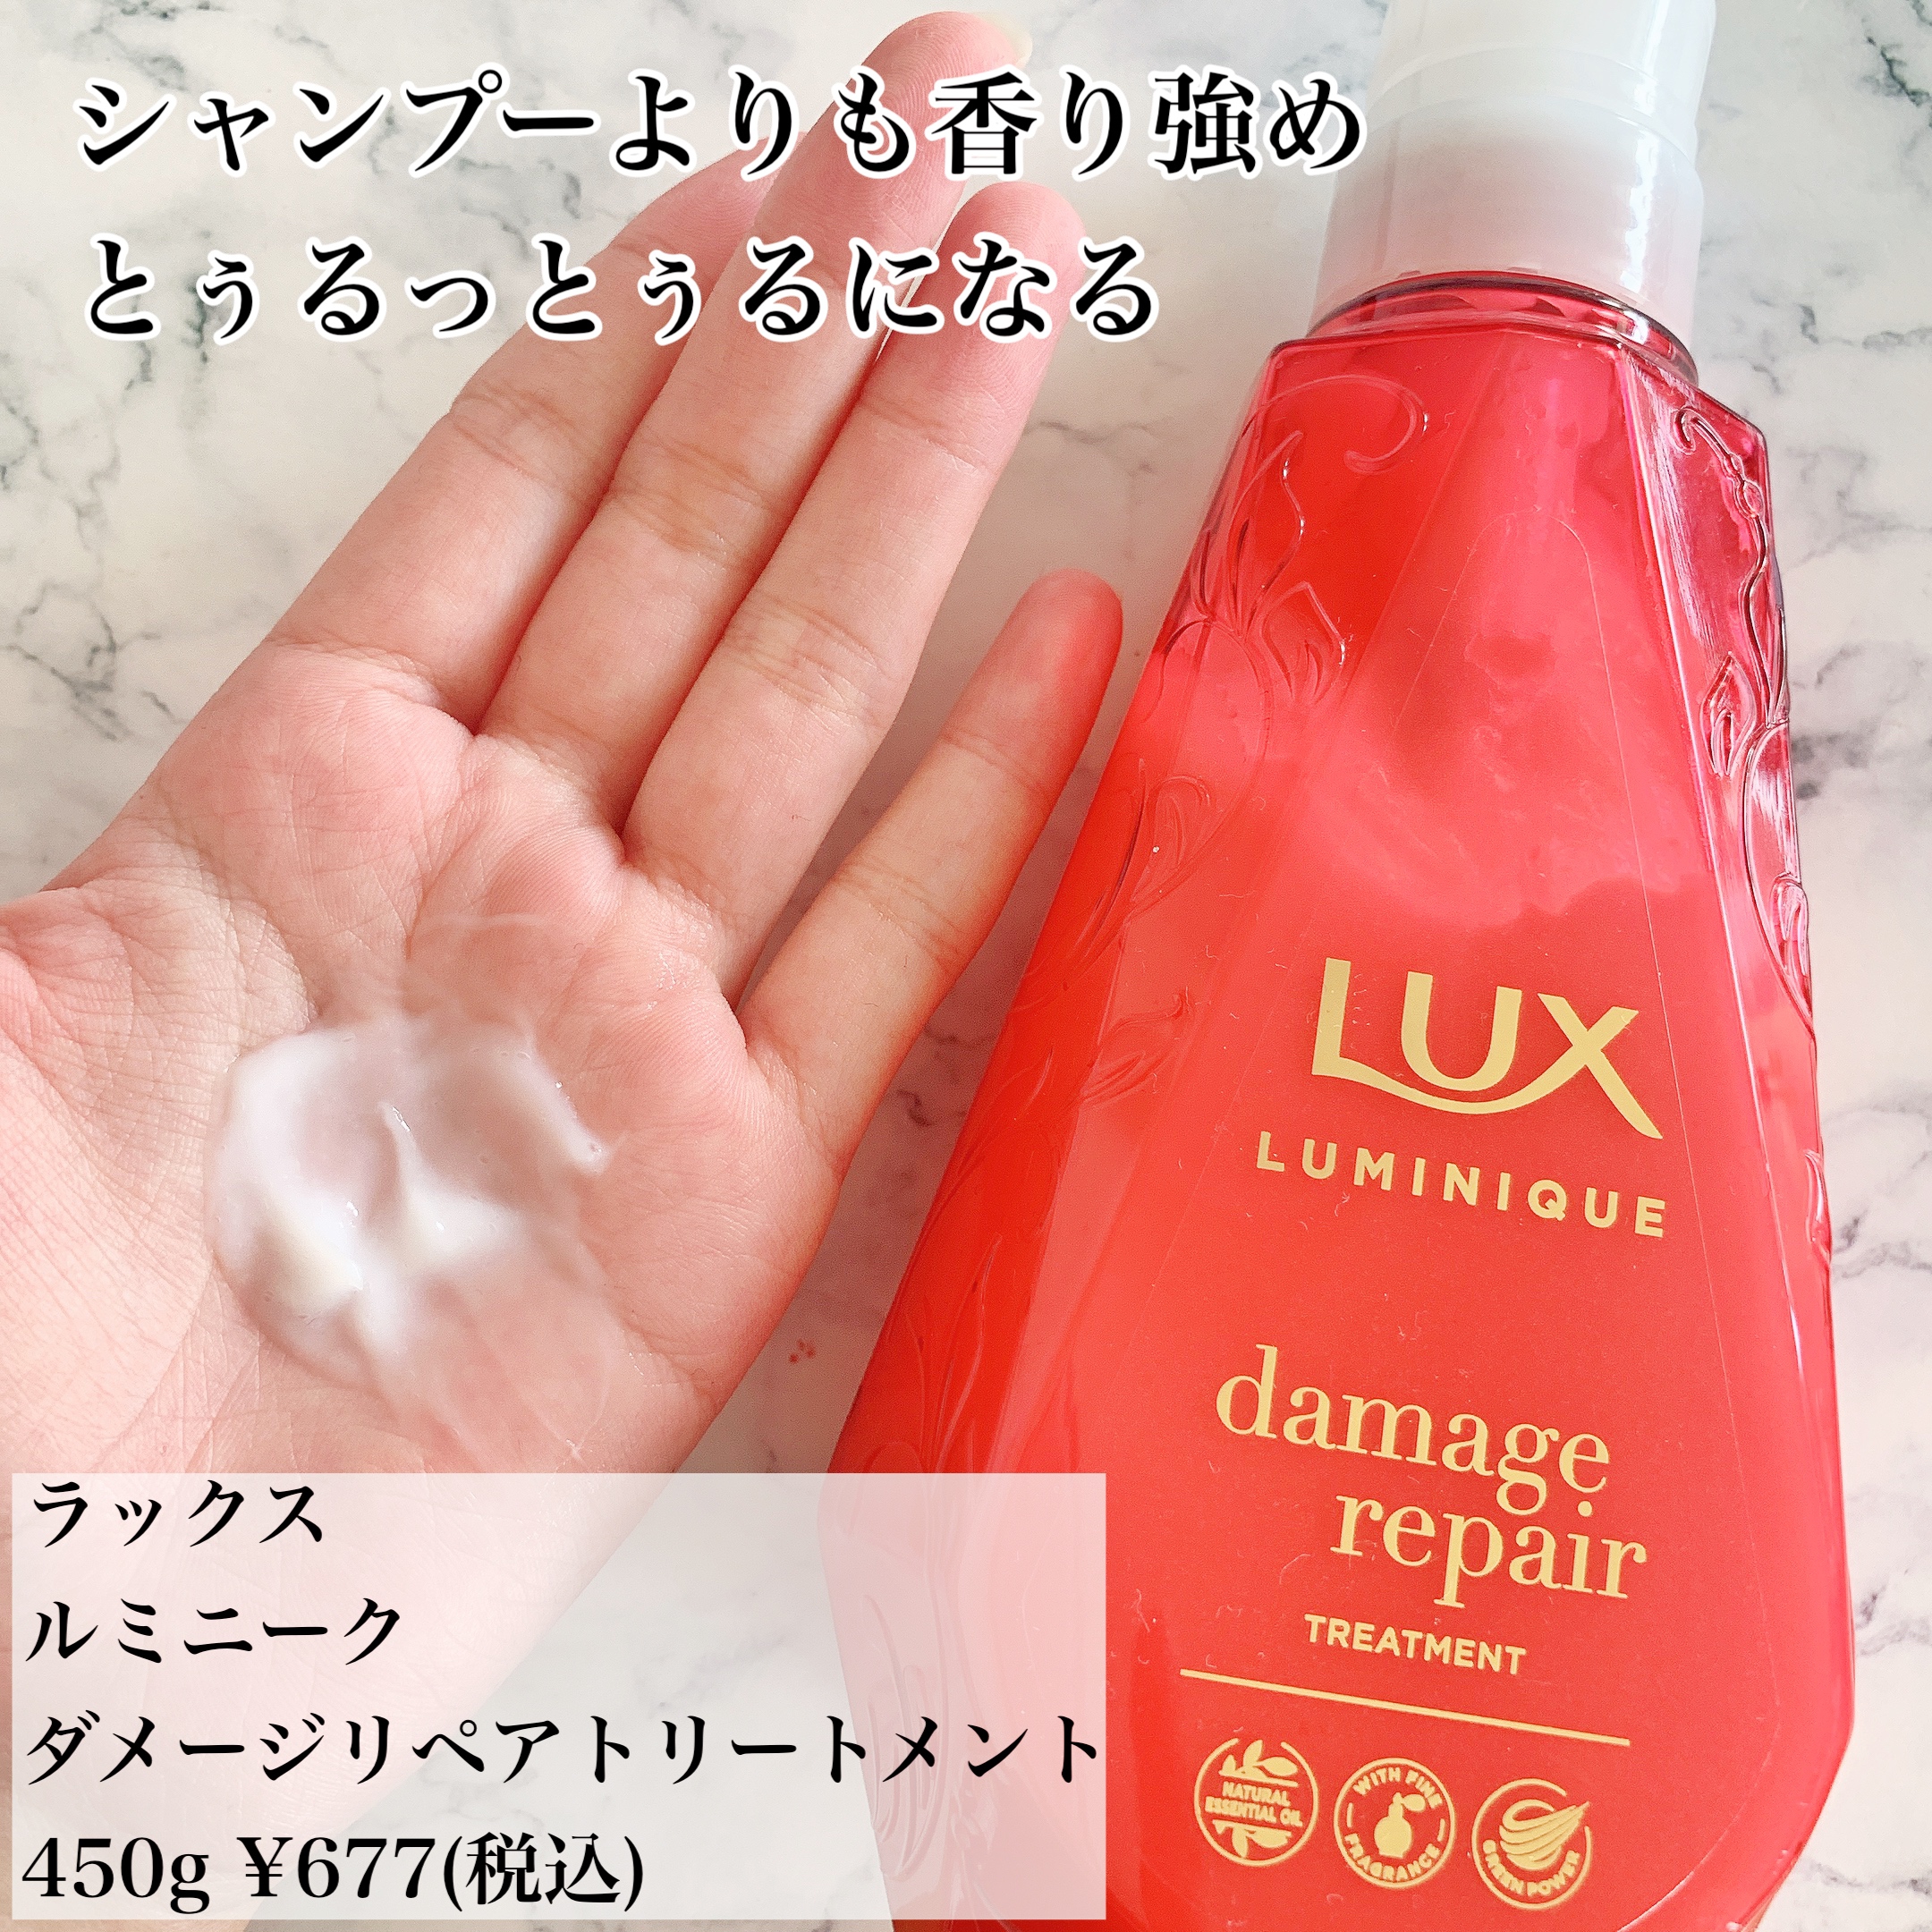 LUX(ラックス) ルミニーク ダメージリペア シャンプーの良い点・メリットに関するまみやこさんの口コミ画像3